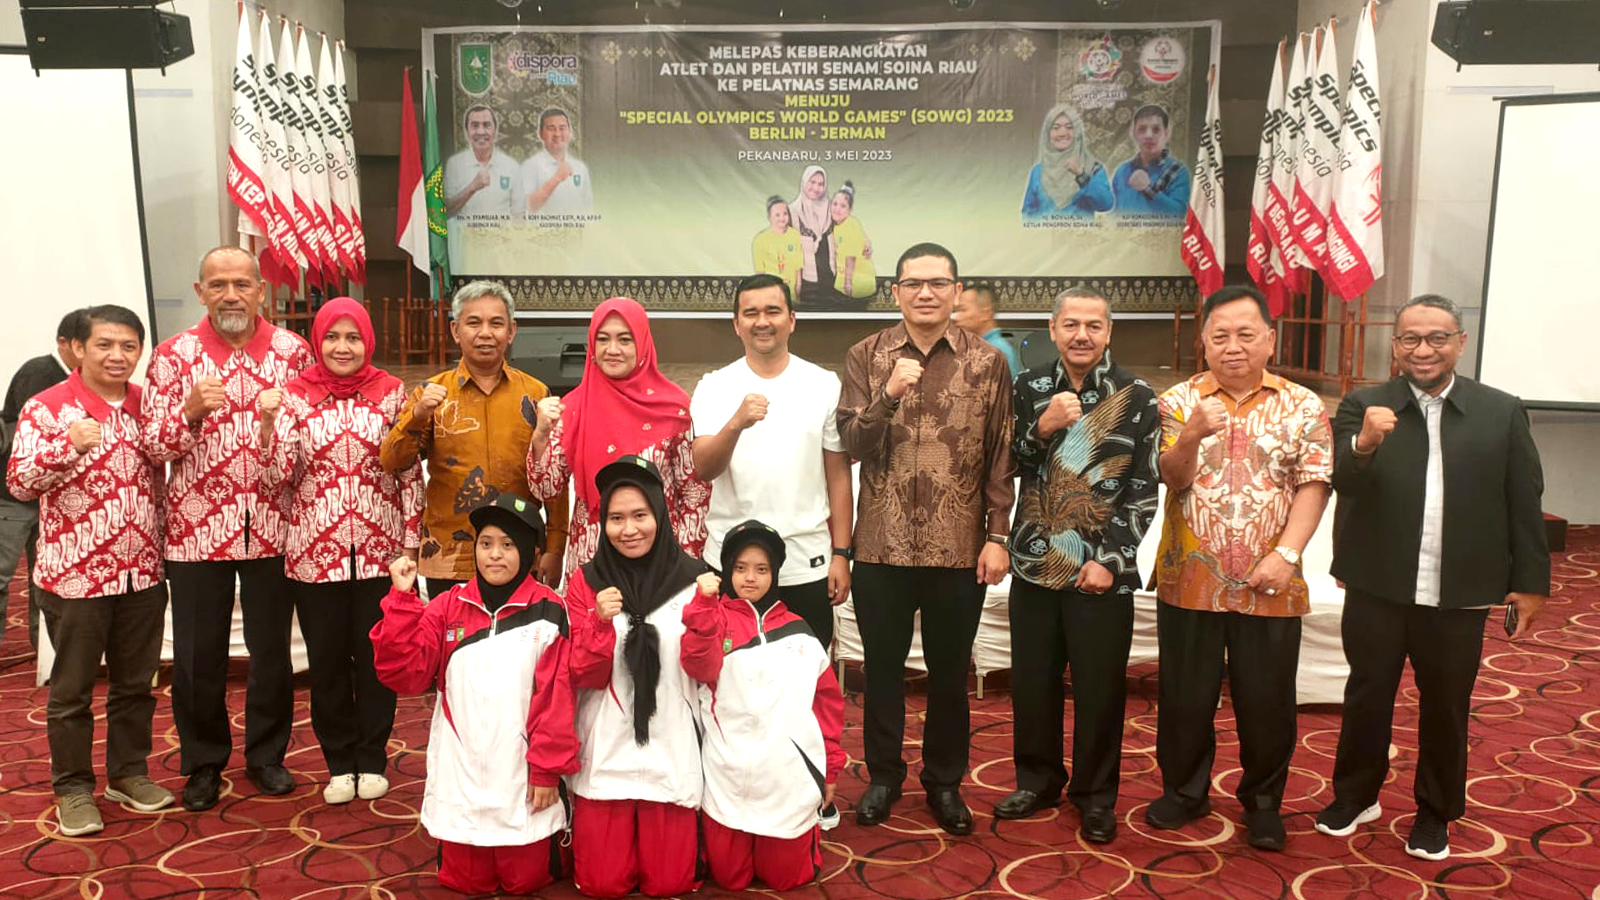 Dilepas Kadispora, Atlet SOIna Riau Khairani Dan Nur Hazizah Bertekad Rebut Juara 1